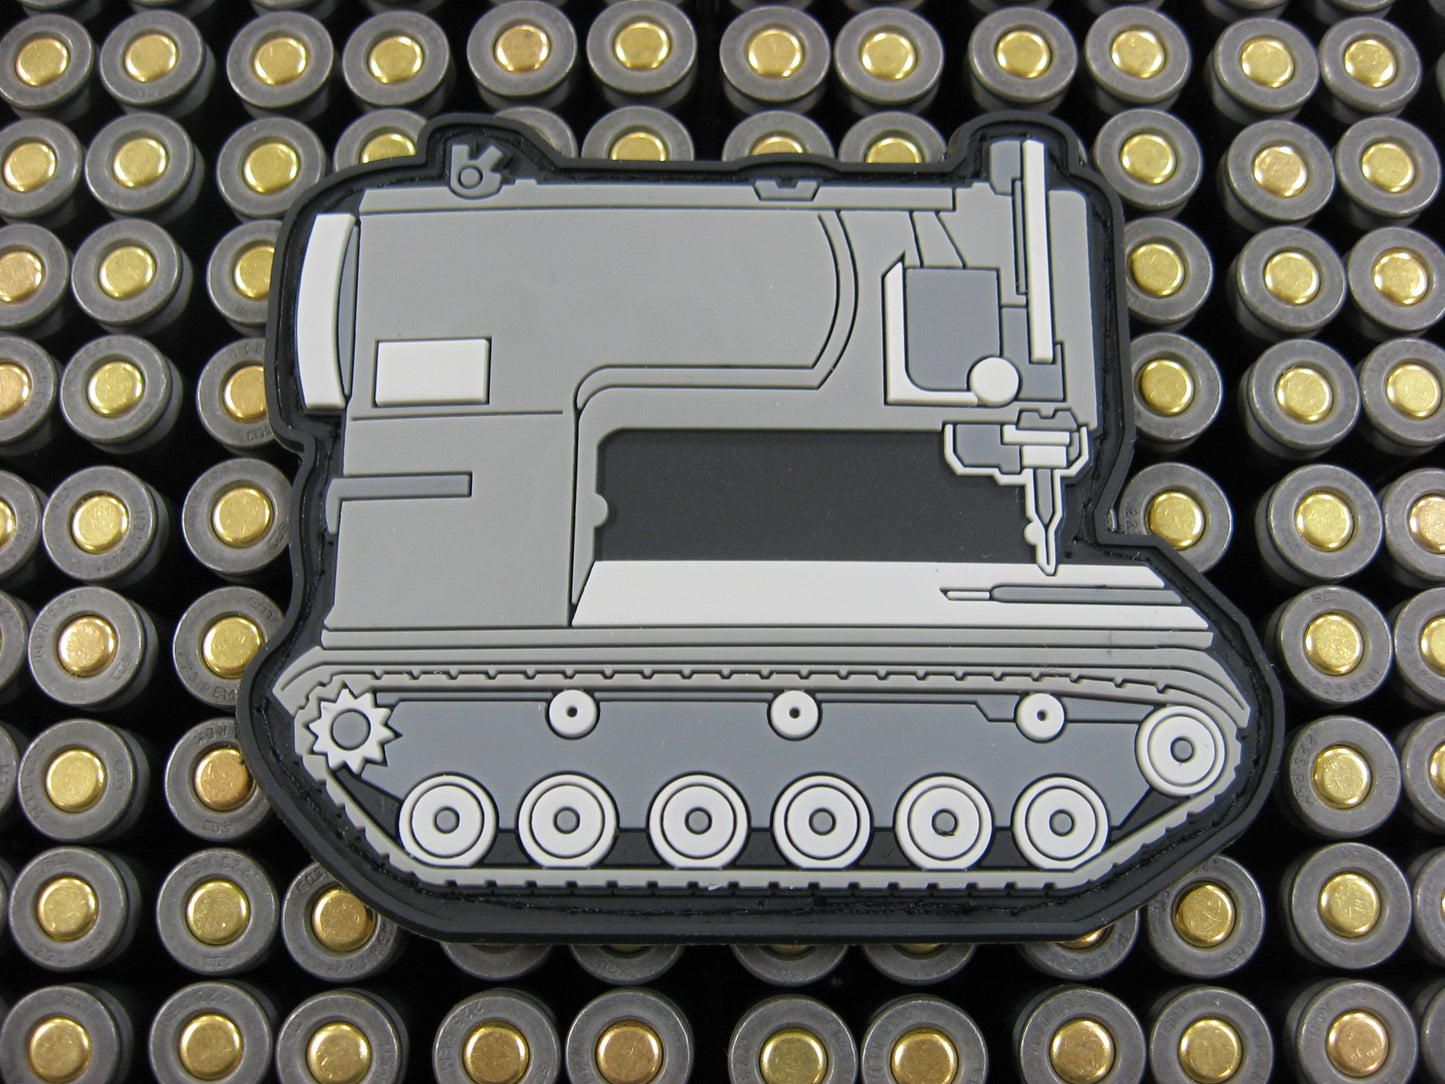 Sewing Machine Tank Patch